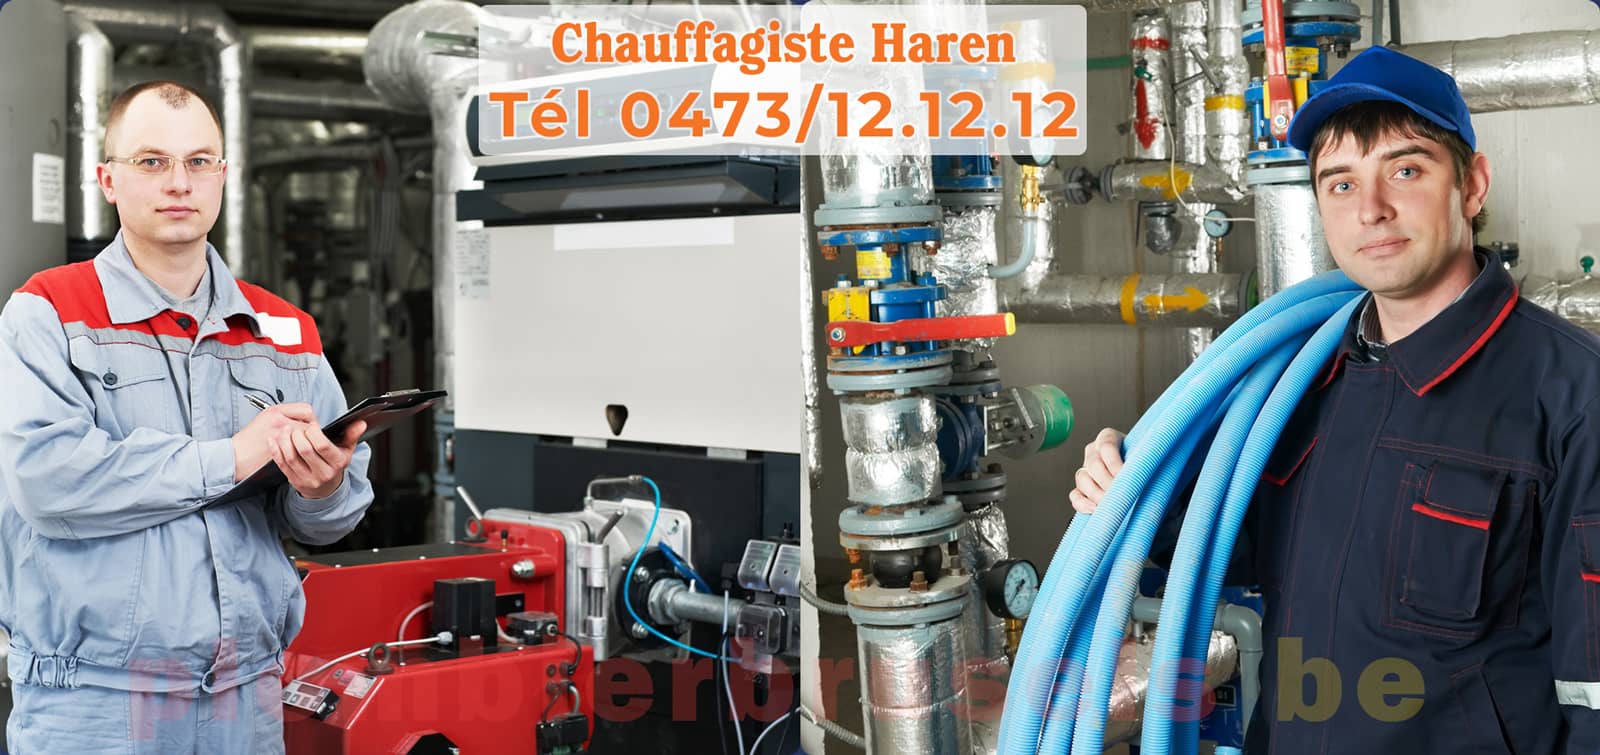 Chauffagiste Haren service de Chauffage tél 0473/12.12.12